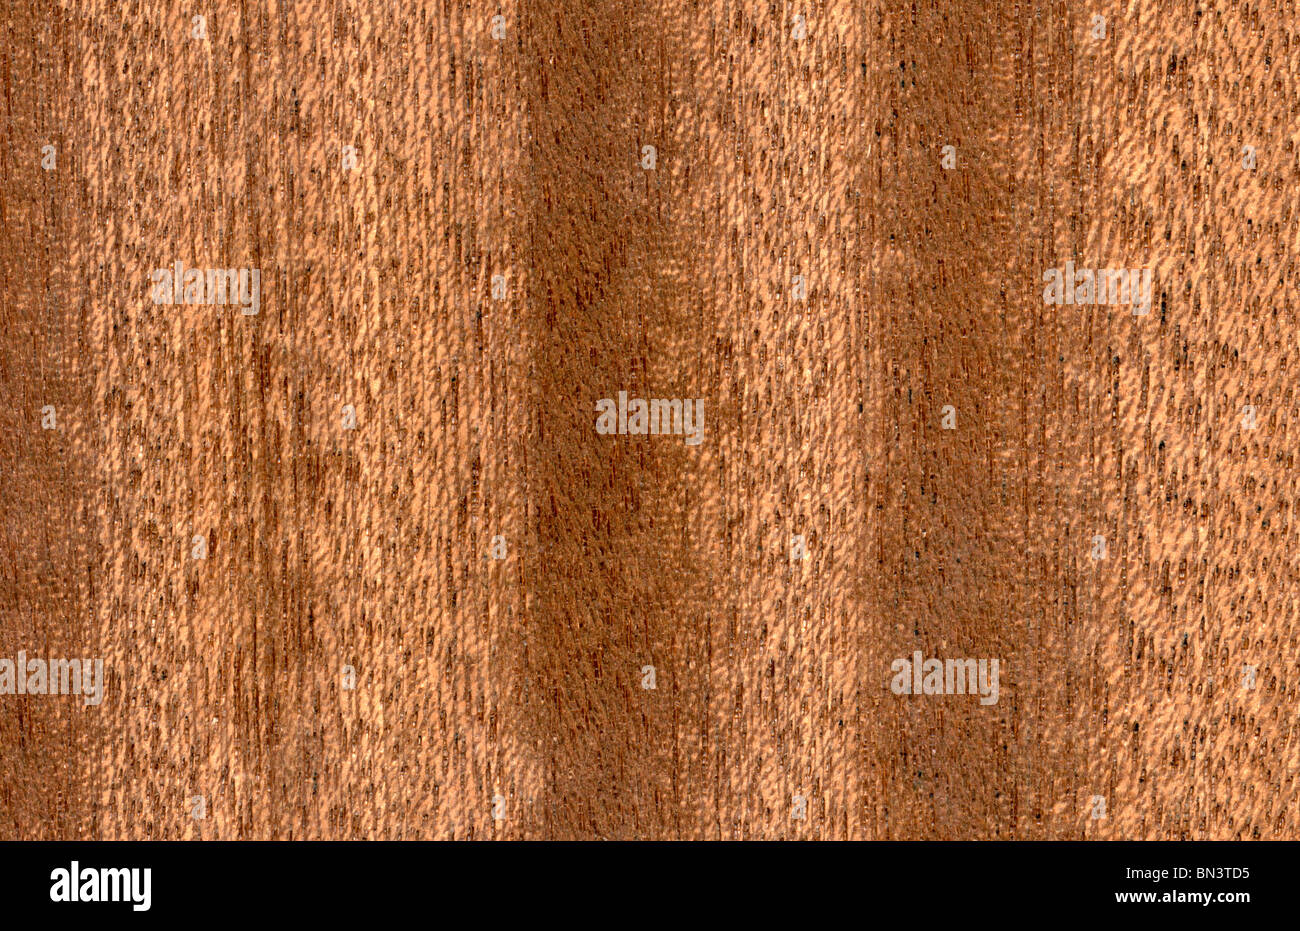 Sapele veneer section, Entandrophragma cylindricum, Africa, Sapele wood grain Stock Photo